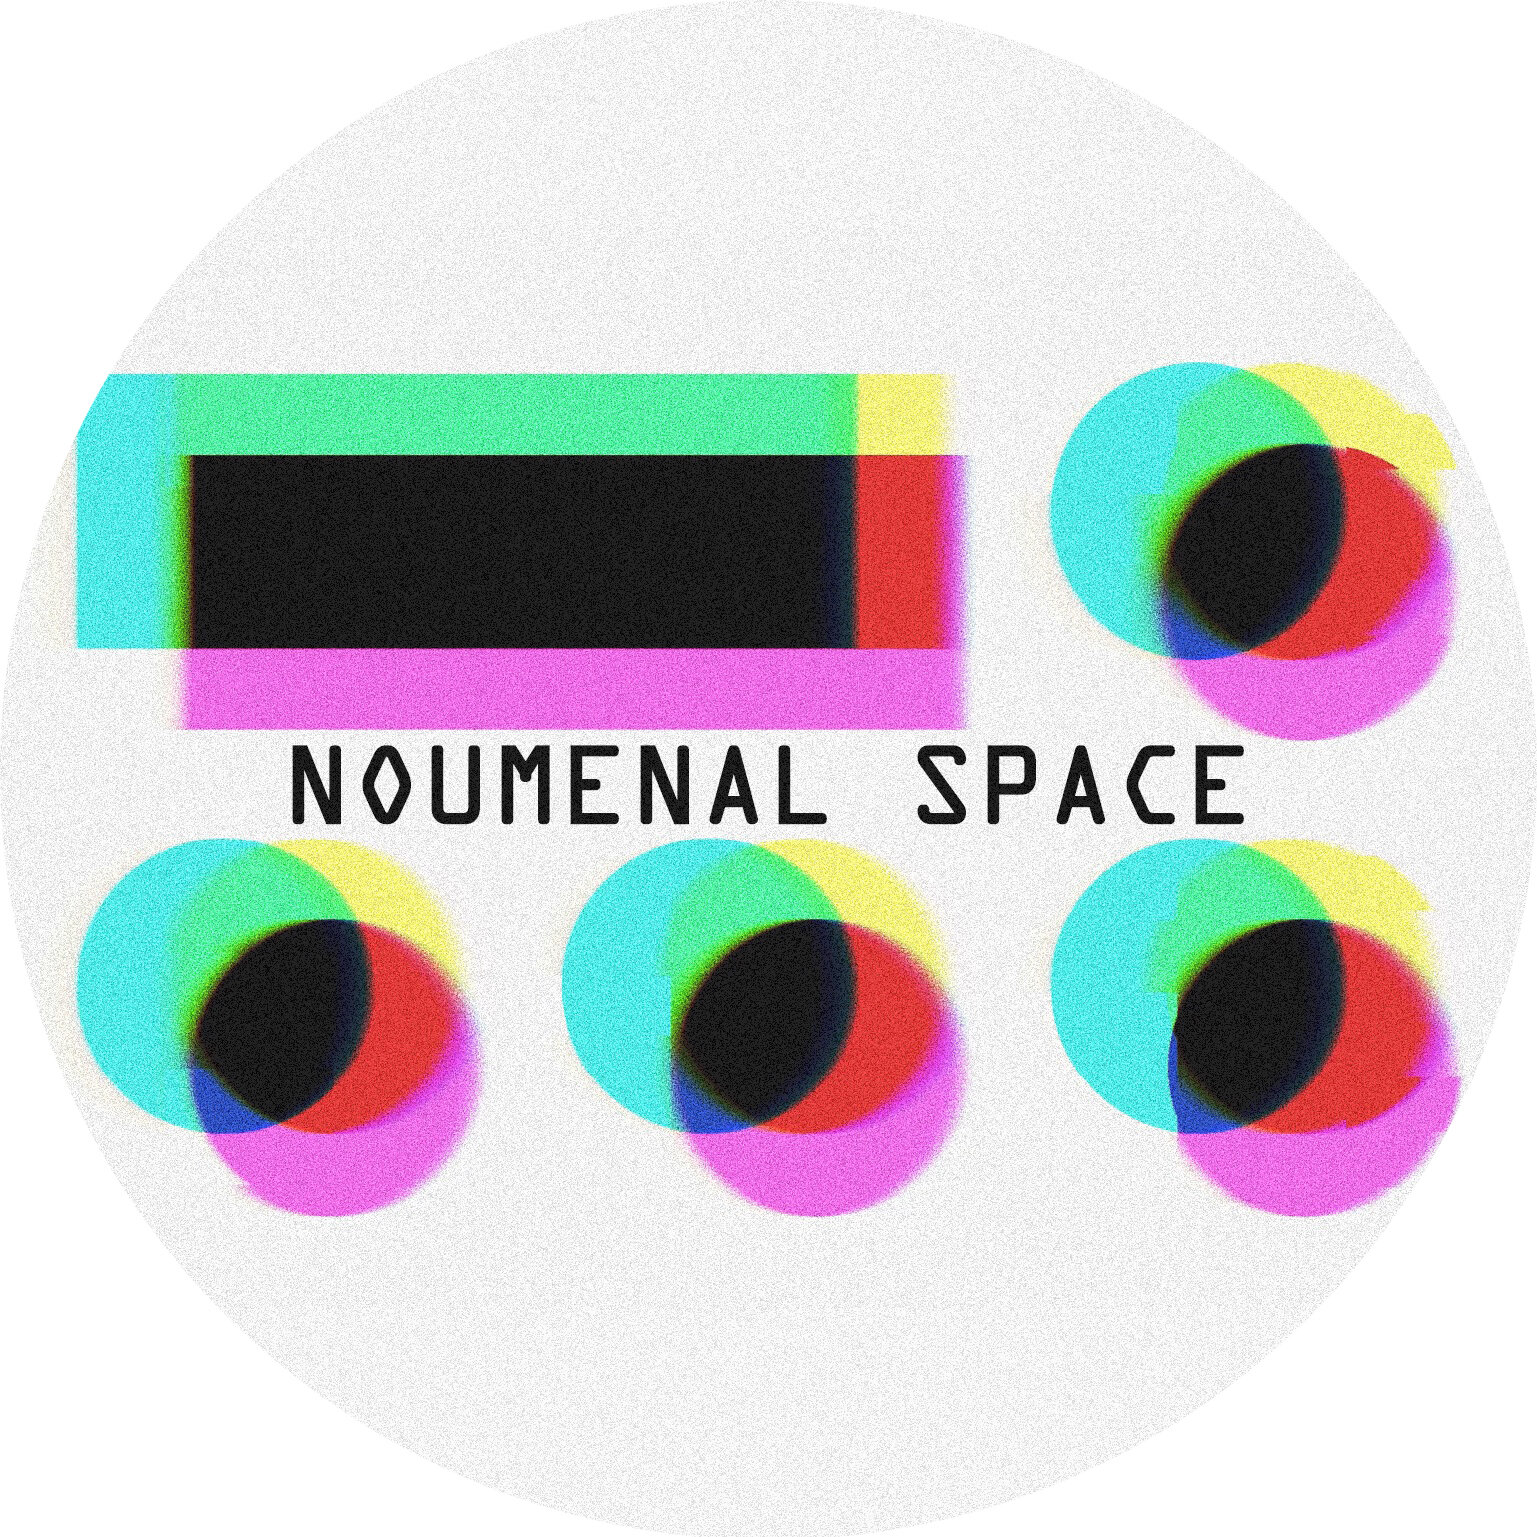 NOUMENAL SPACE